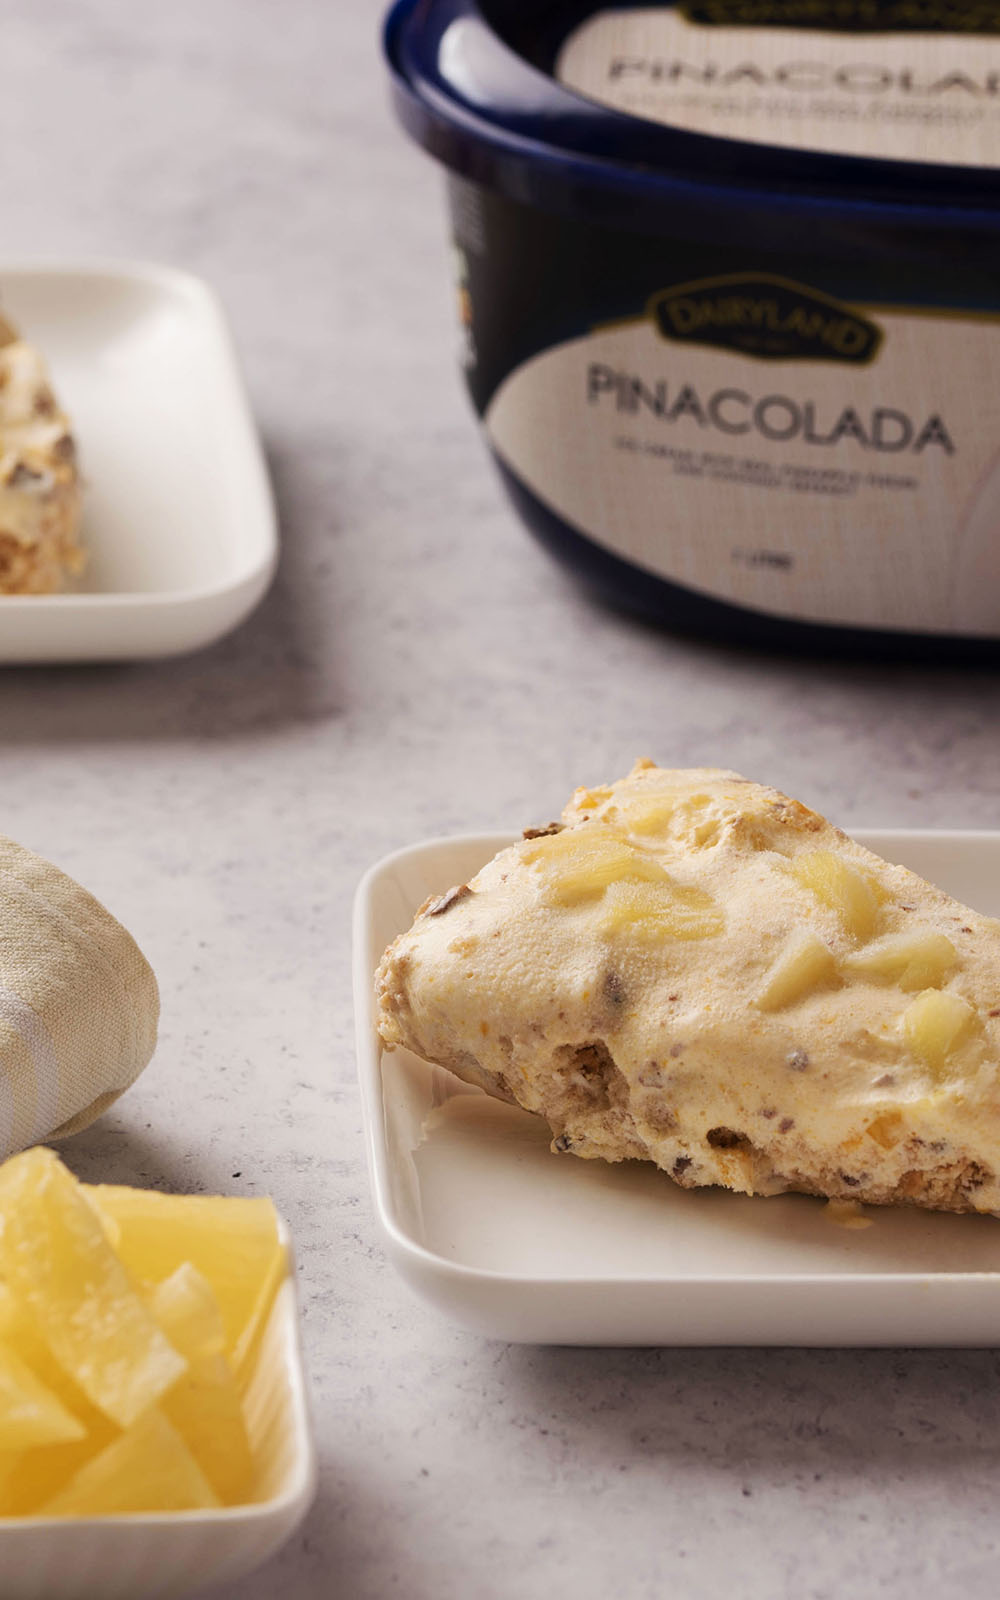 Dairyland Pinacolada ice cream